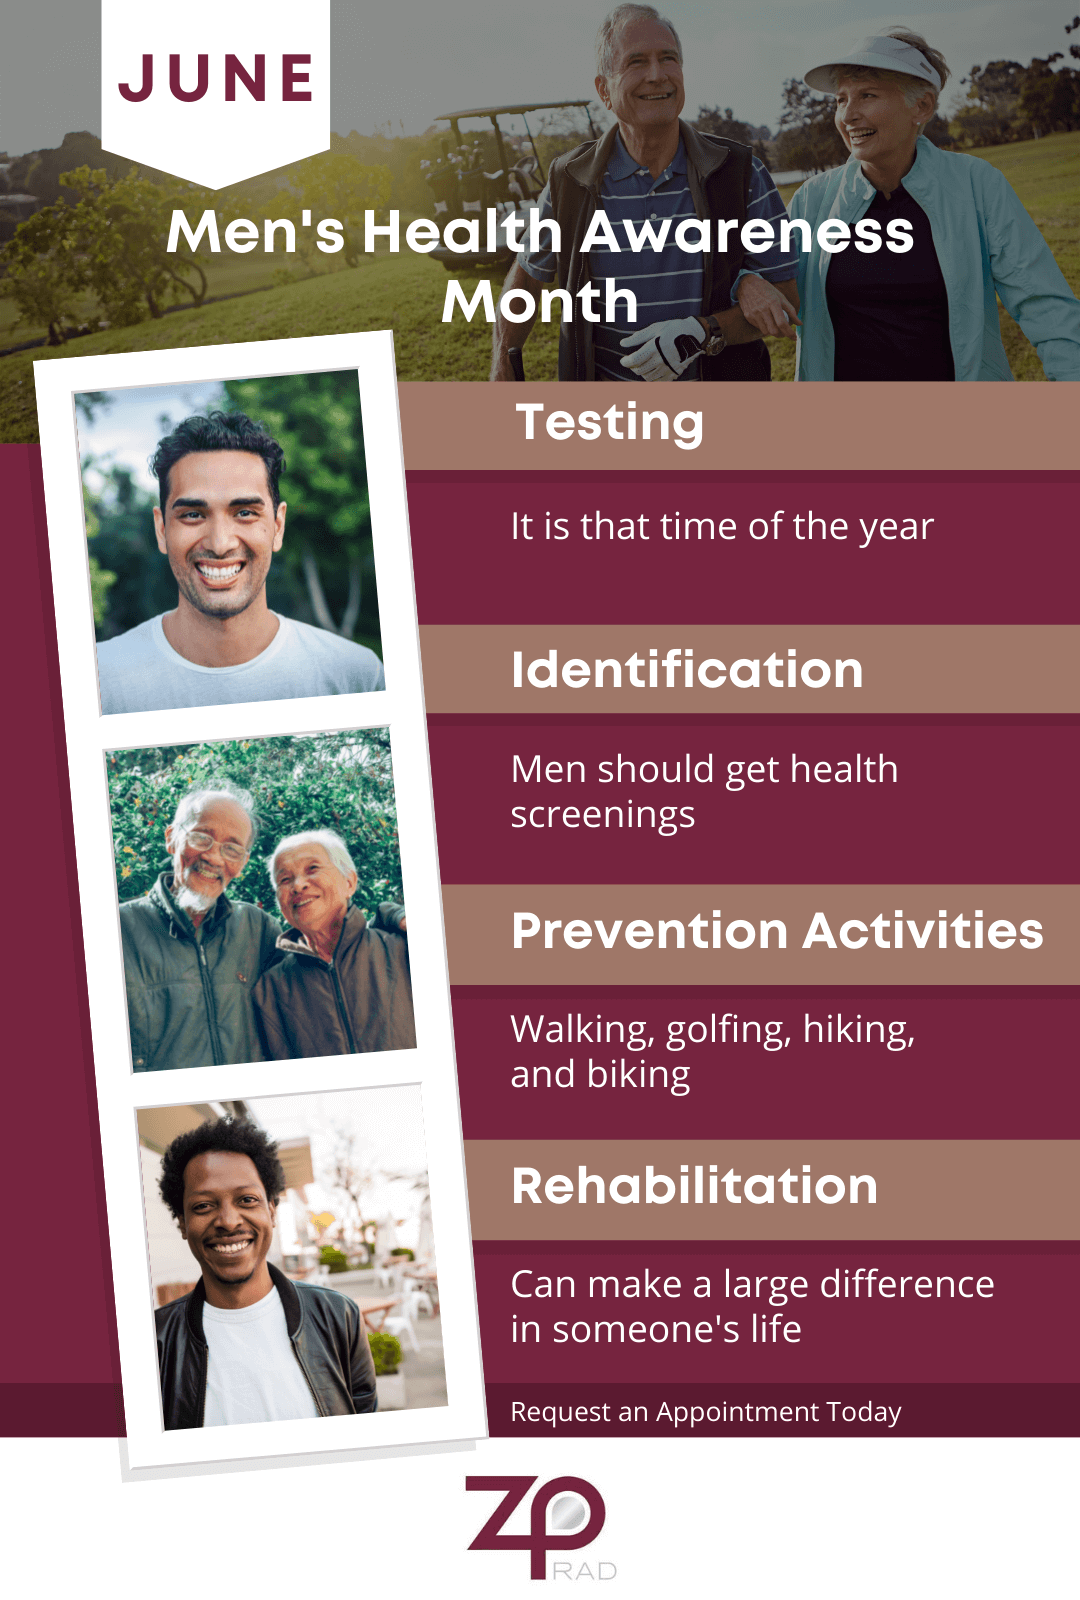 June: Men's health awareness month